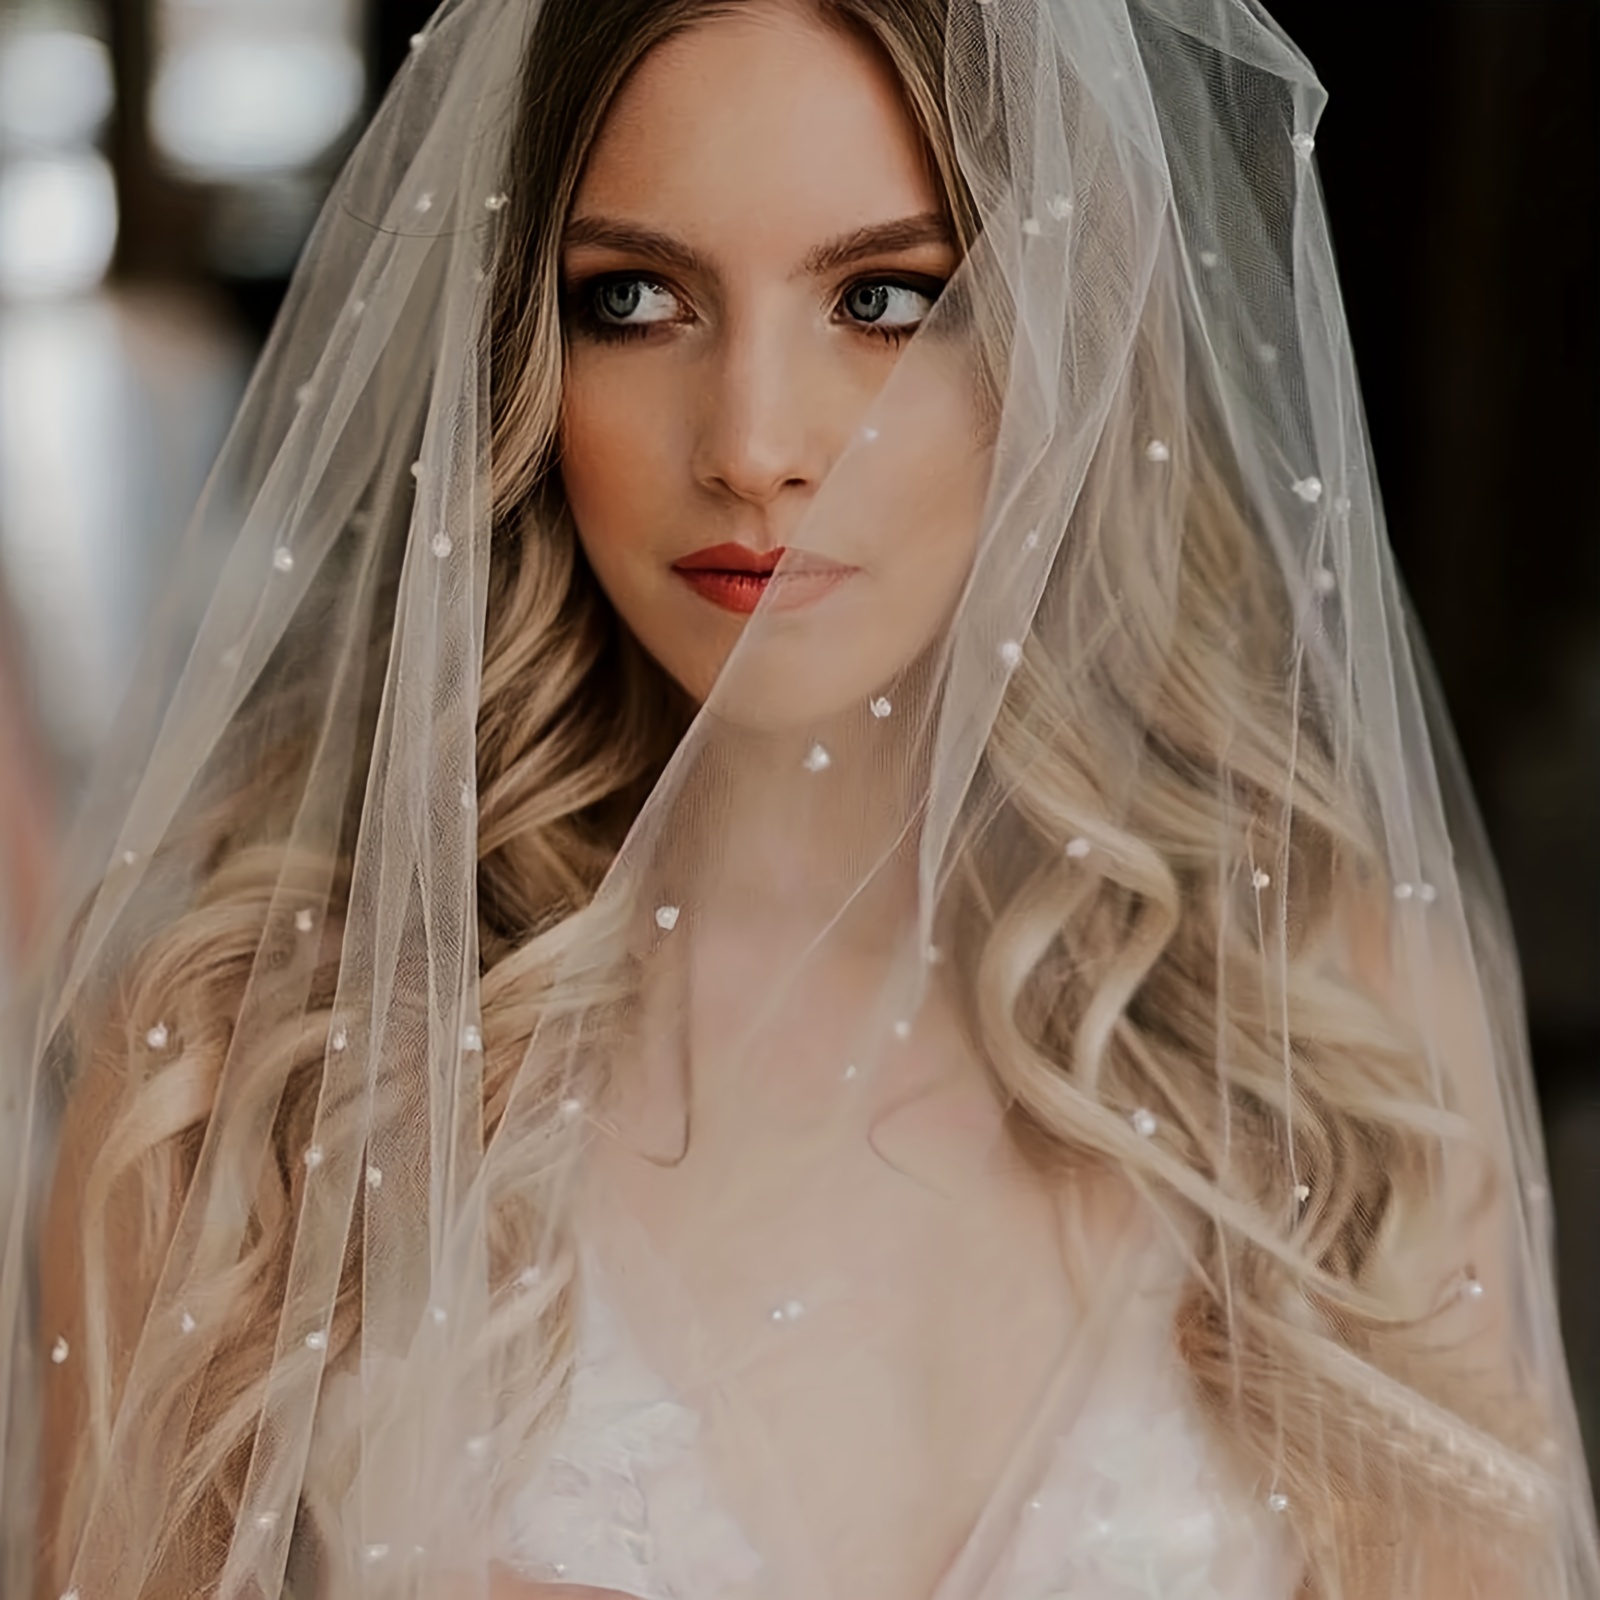 Veil Wedding Bridal Black Veils Gothic Shortmesh Headpiece Lace Bride  Headdress Party Bachelorette Funeralclip Costume 